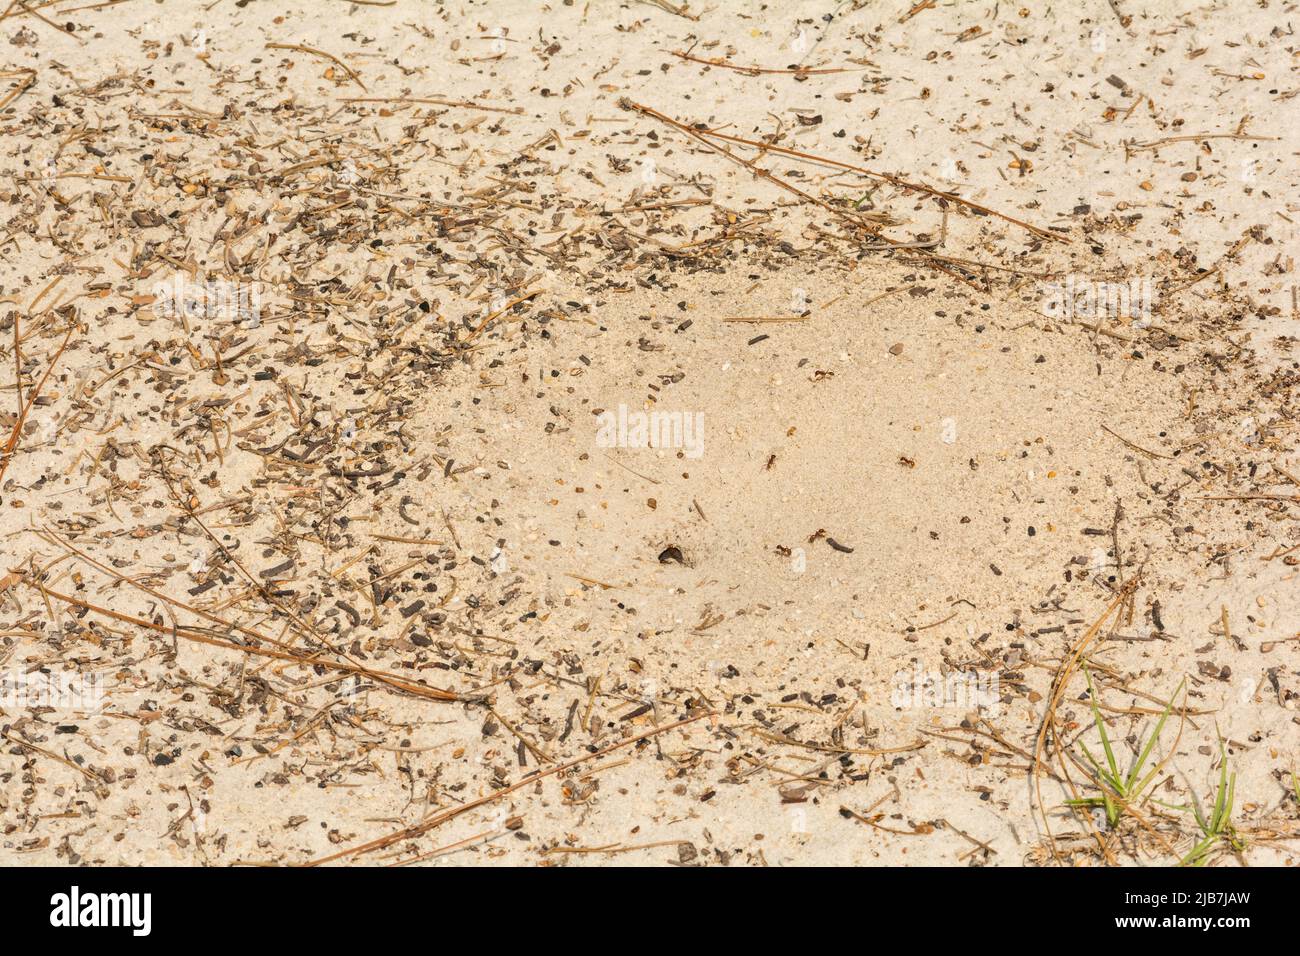 Florida Harvester Ant Nest Adornment - Pogonomyrmex badius Stock Photo